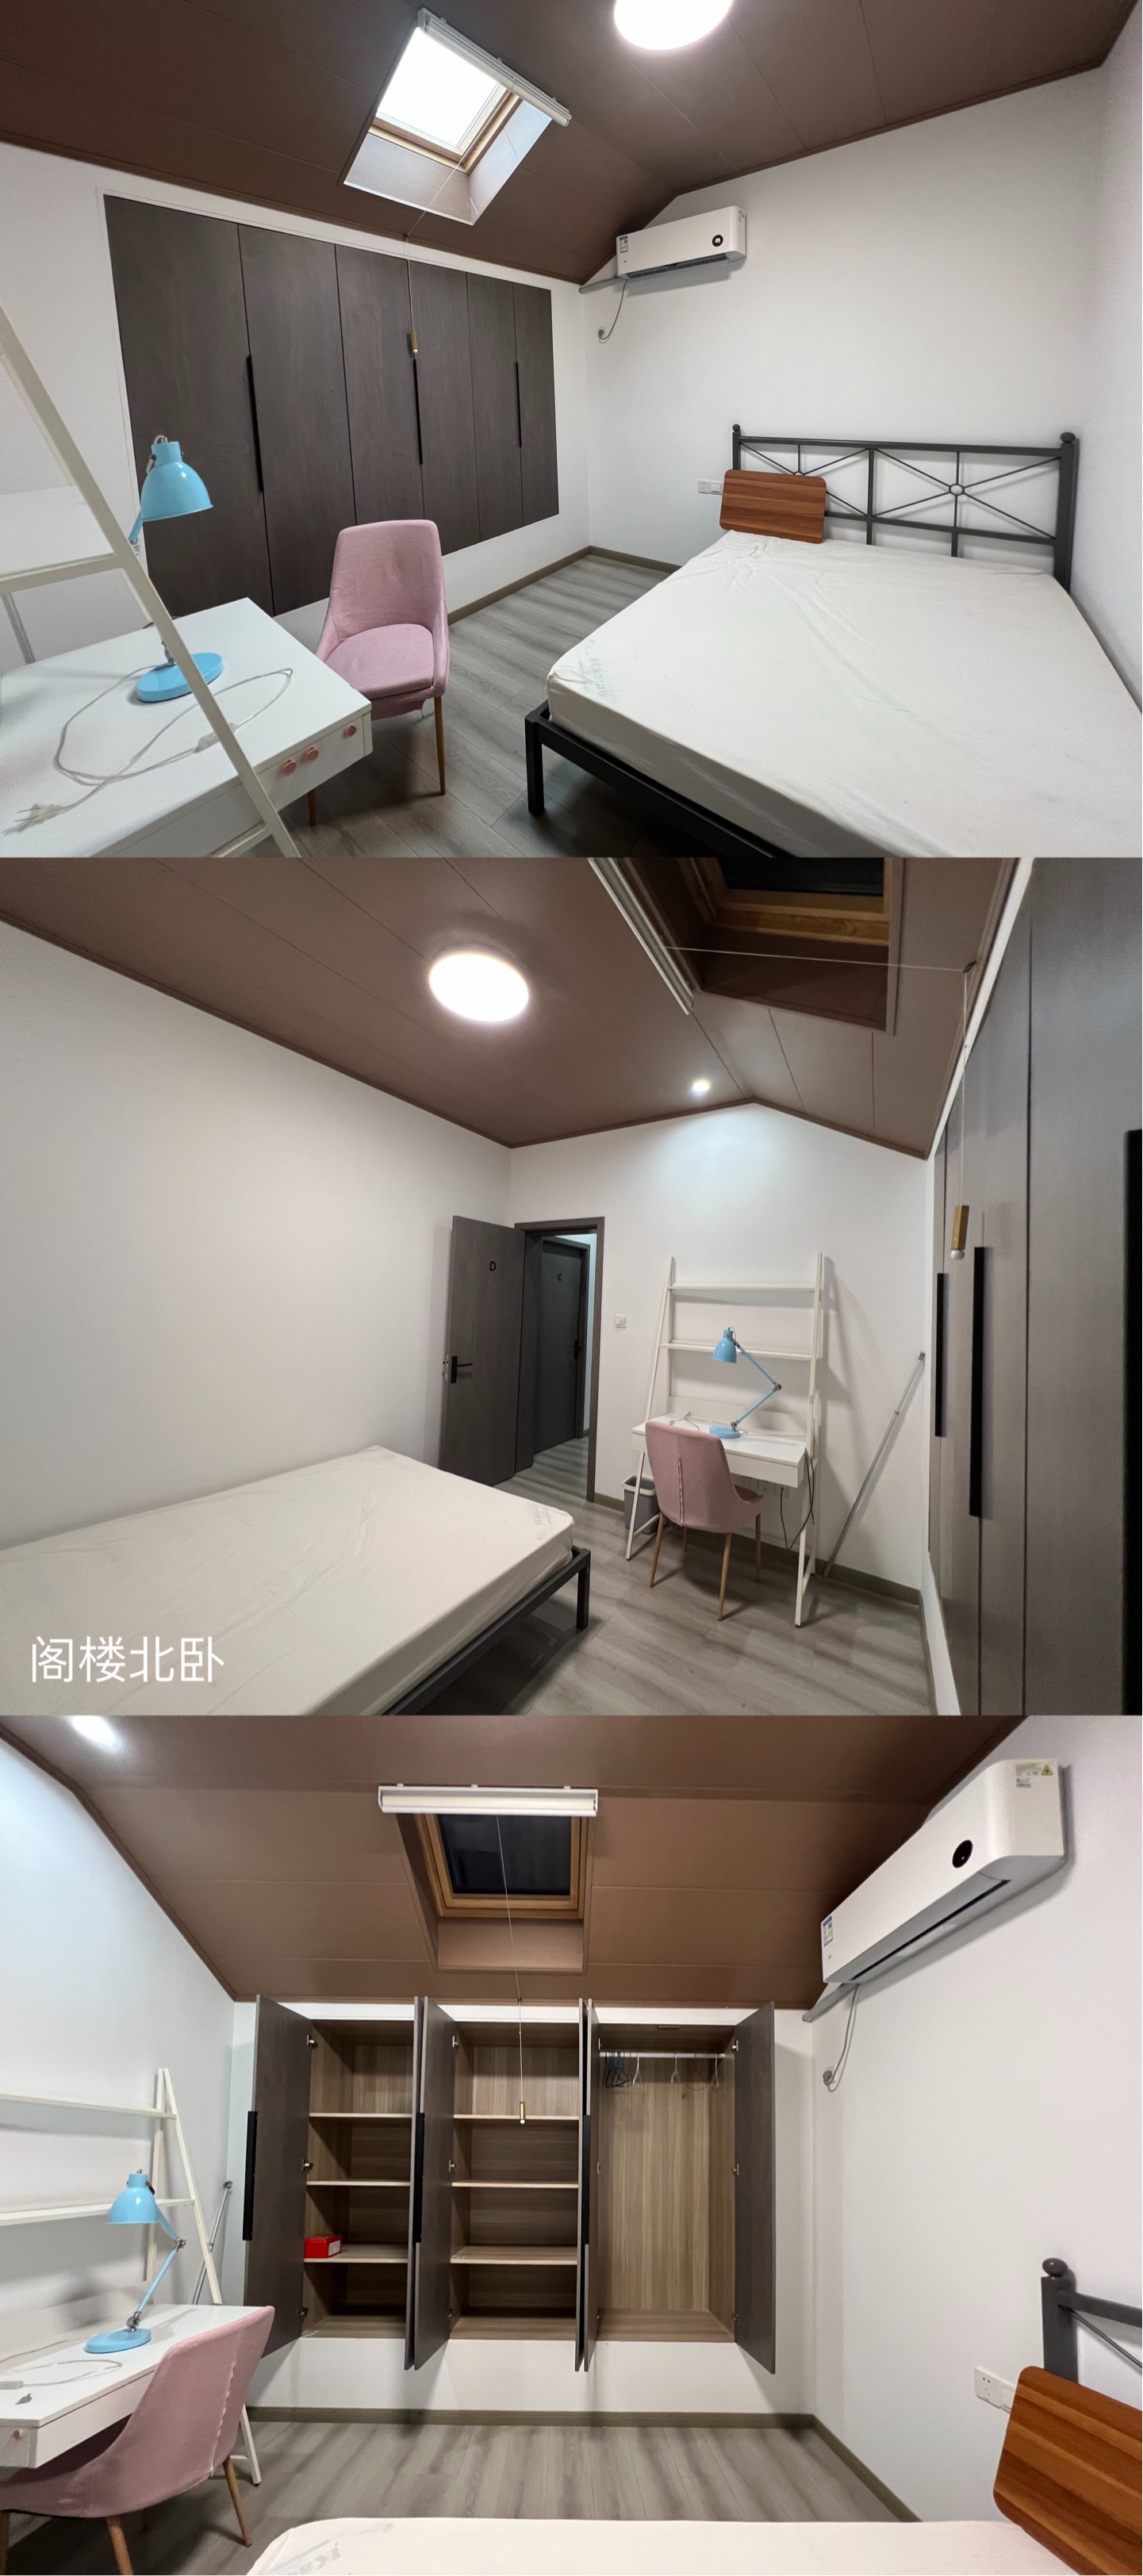 Hangzhou-Gongshu-Cozy Home,Clean&Comfy,No Gender Limit,Pet Friendly